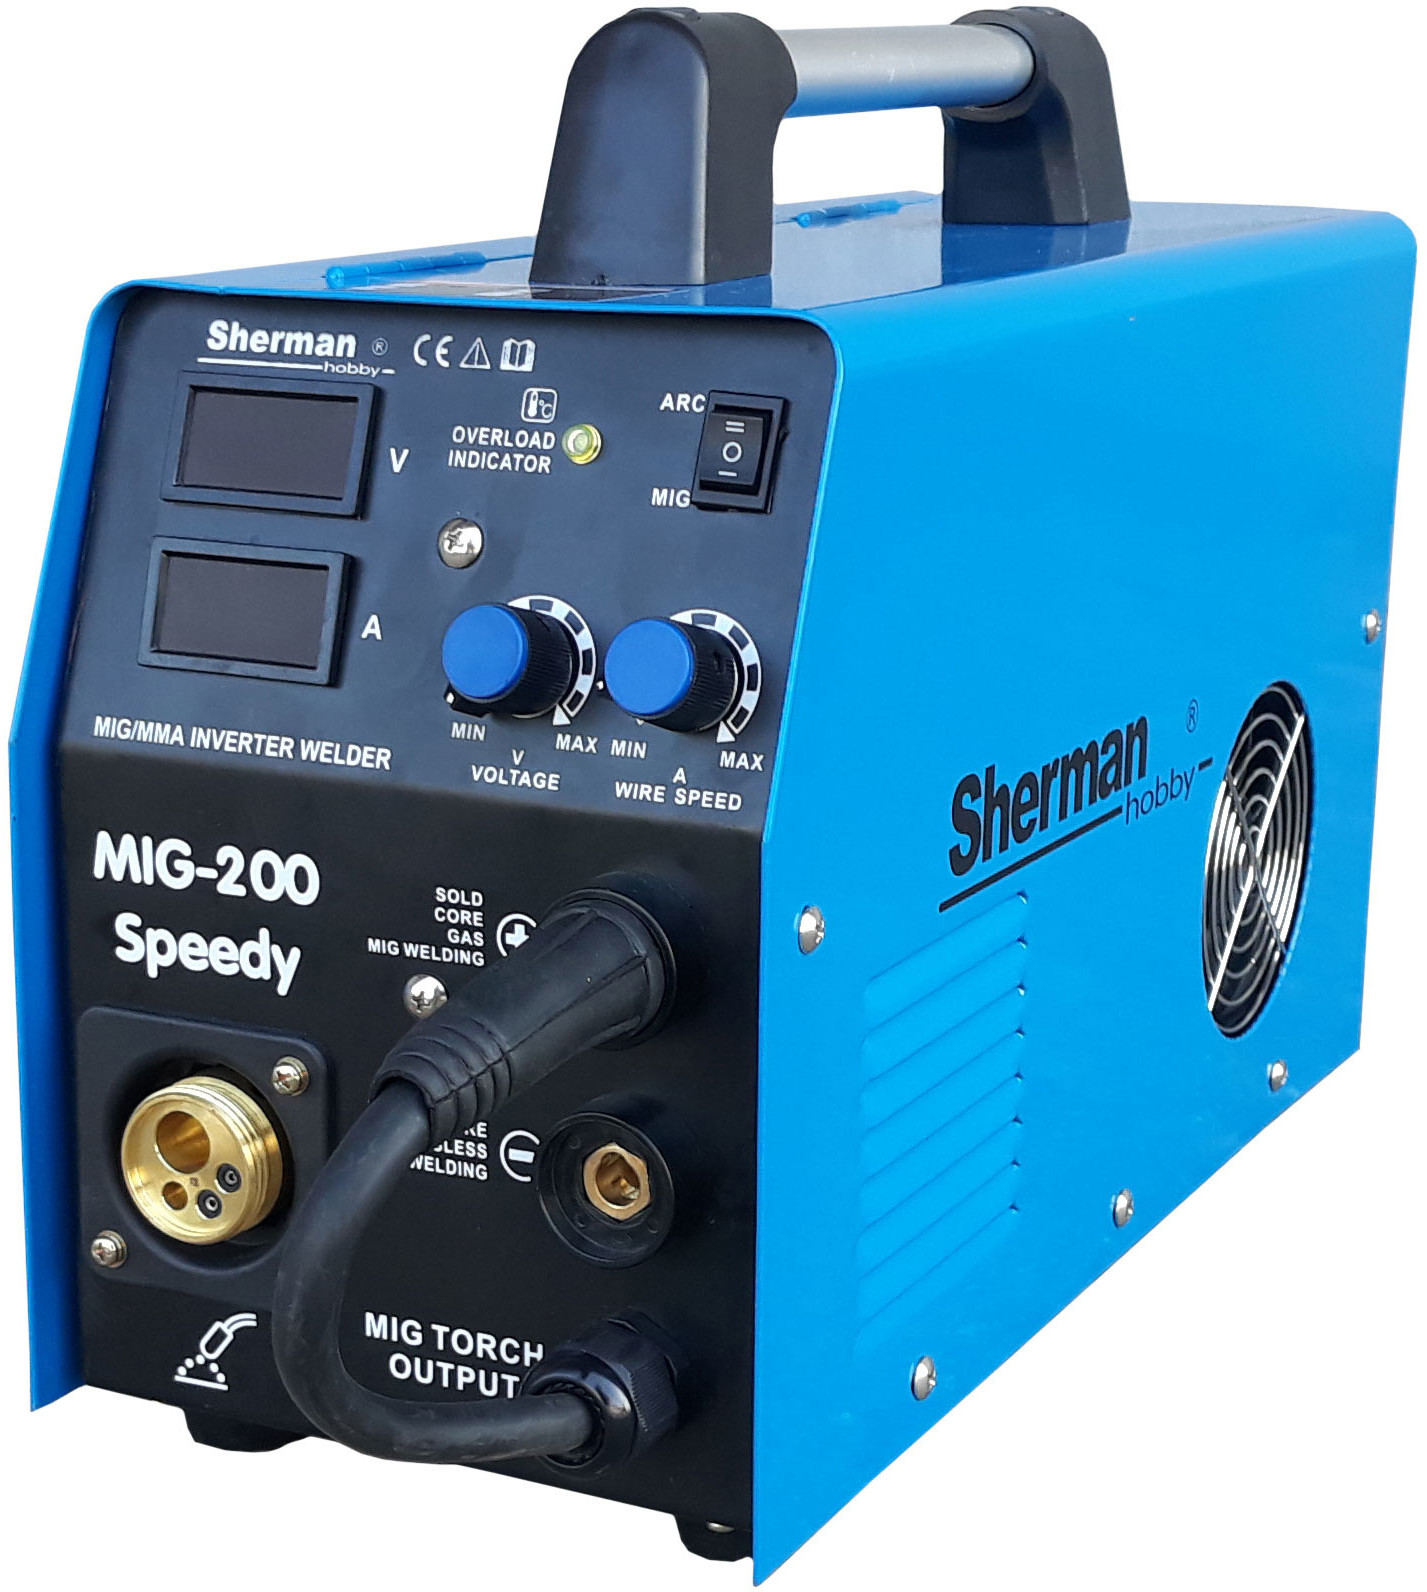 Sherman MIG 200 Speedy